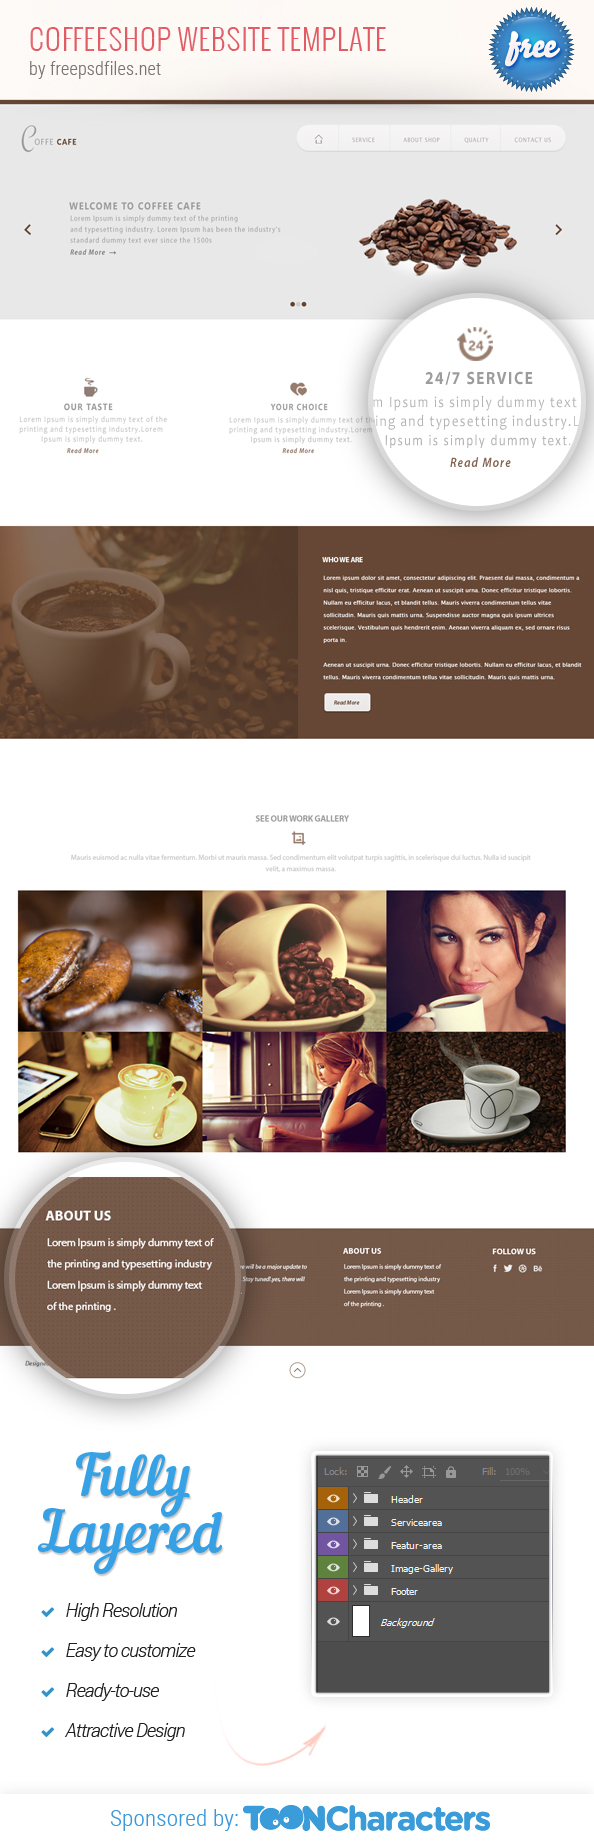 Free PSD Coffeeshop Website Template